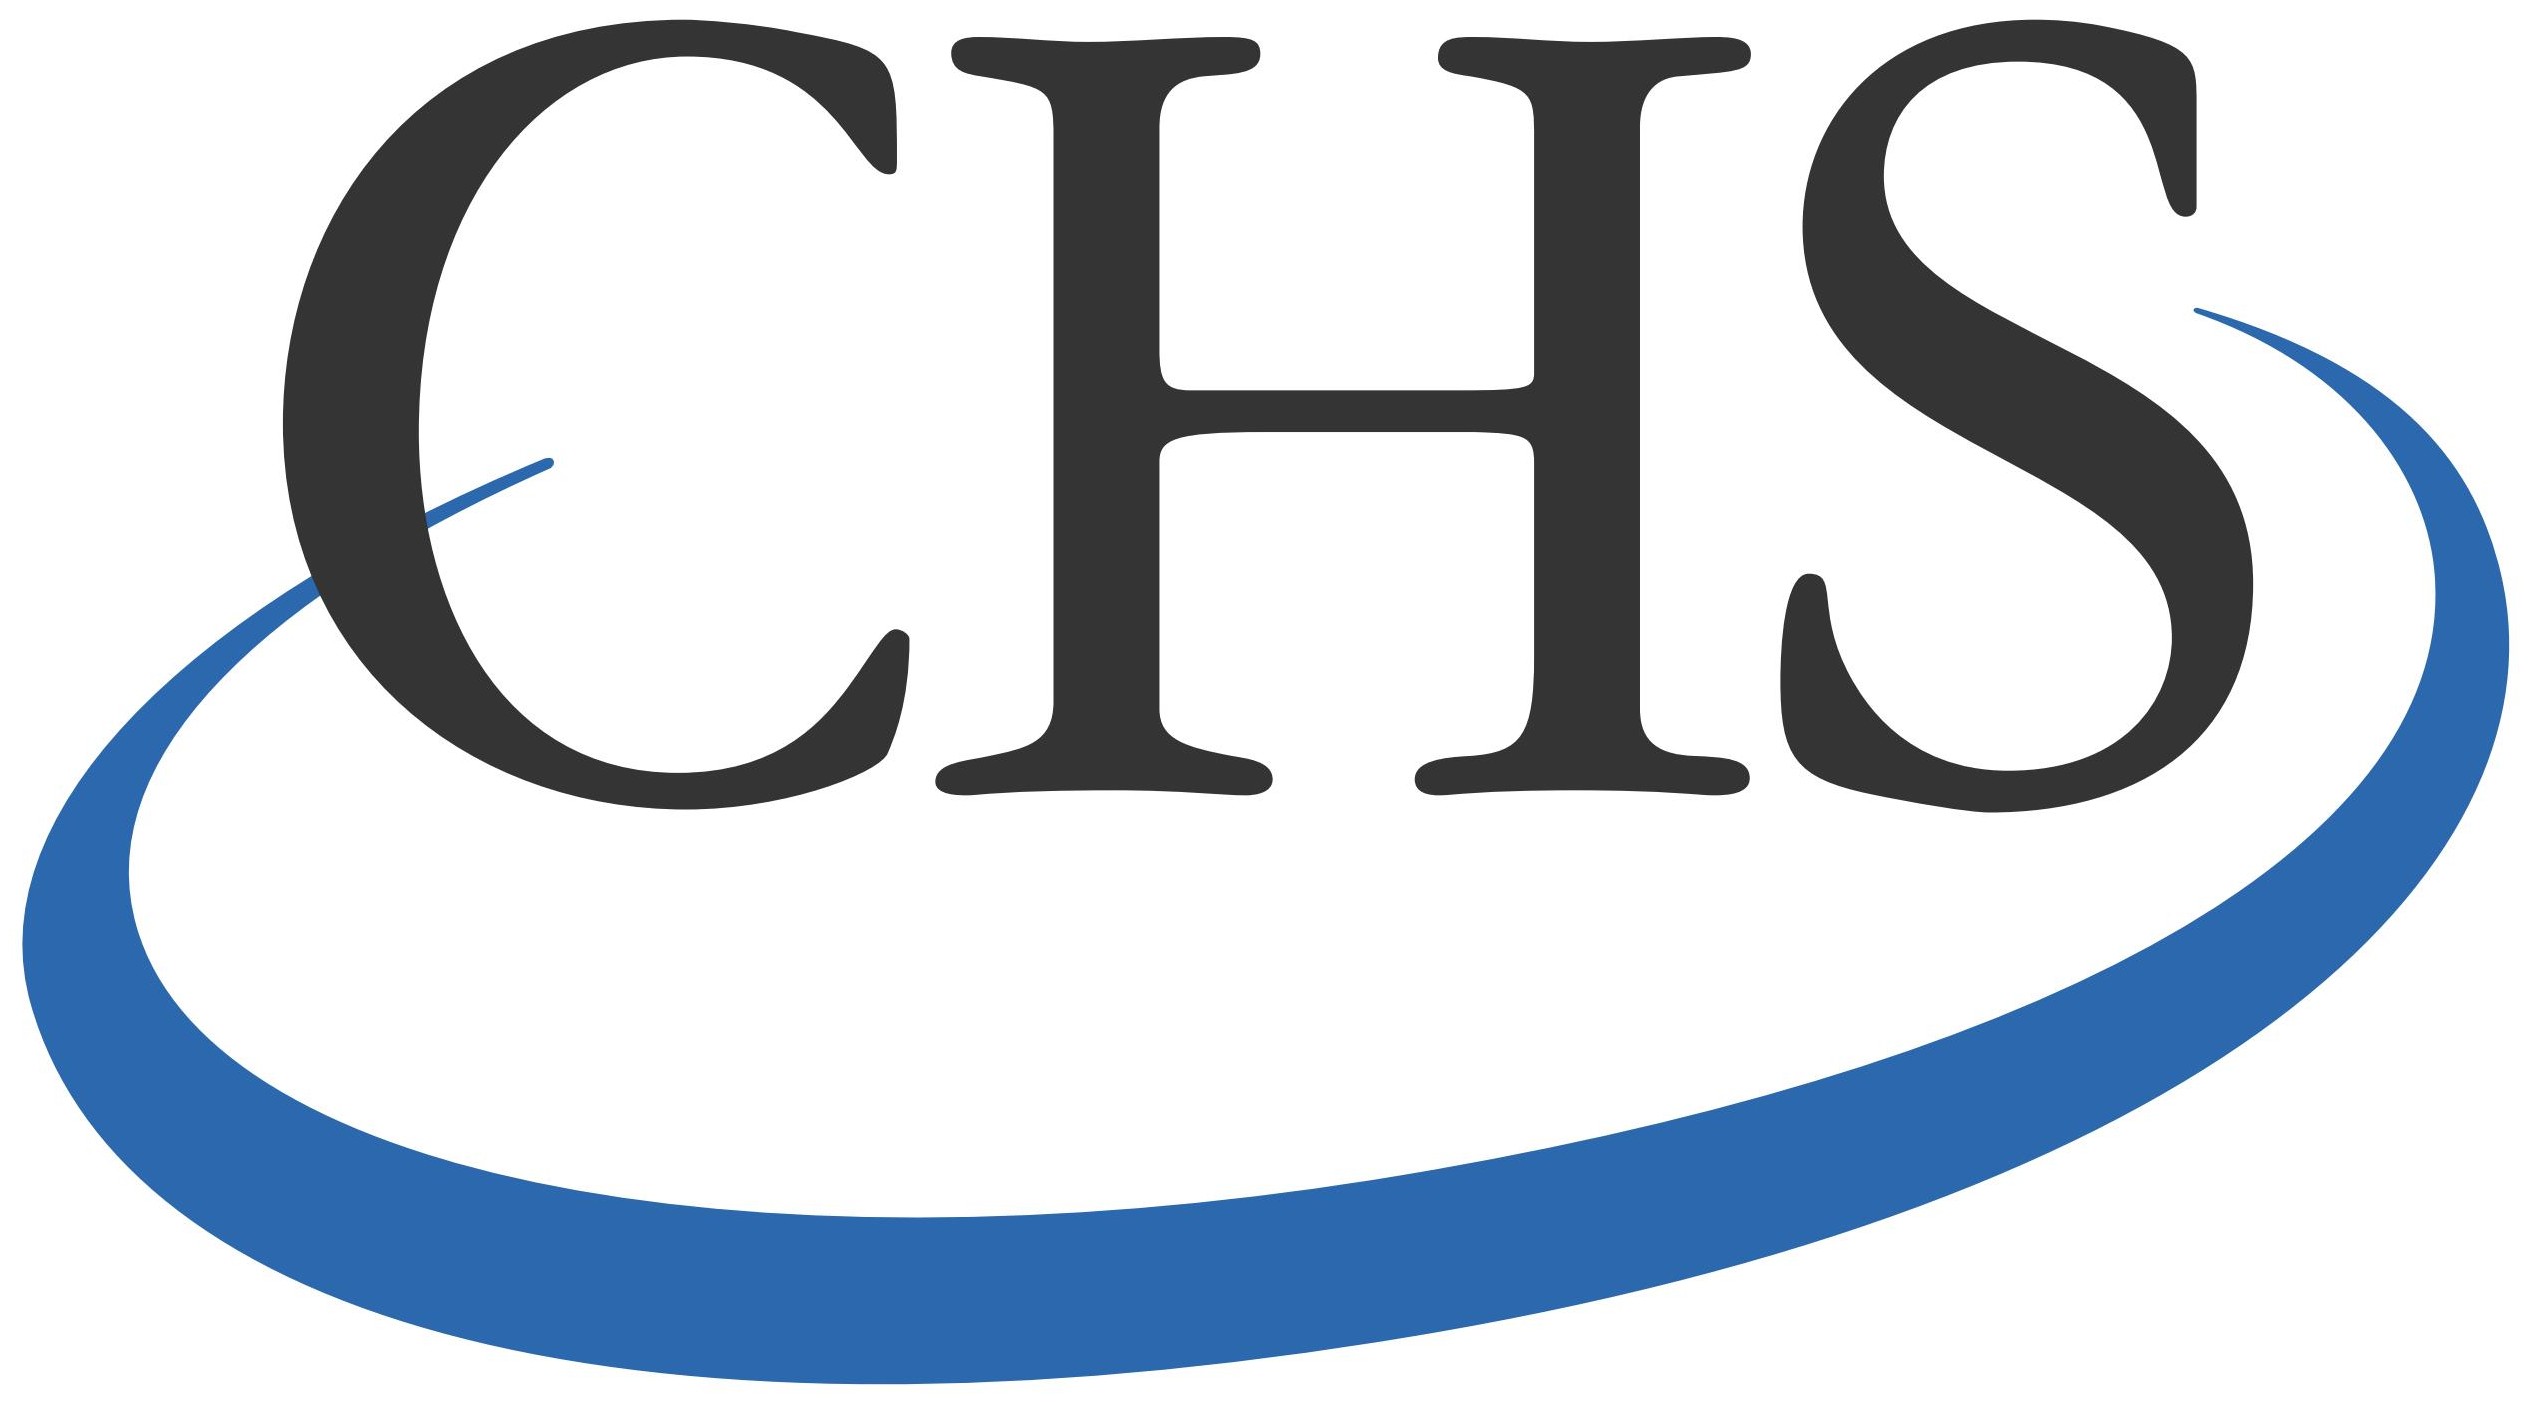 CHS Inc. Logo [EPS File] Vector EPS Free Download, Logo, Icons 